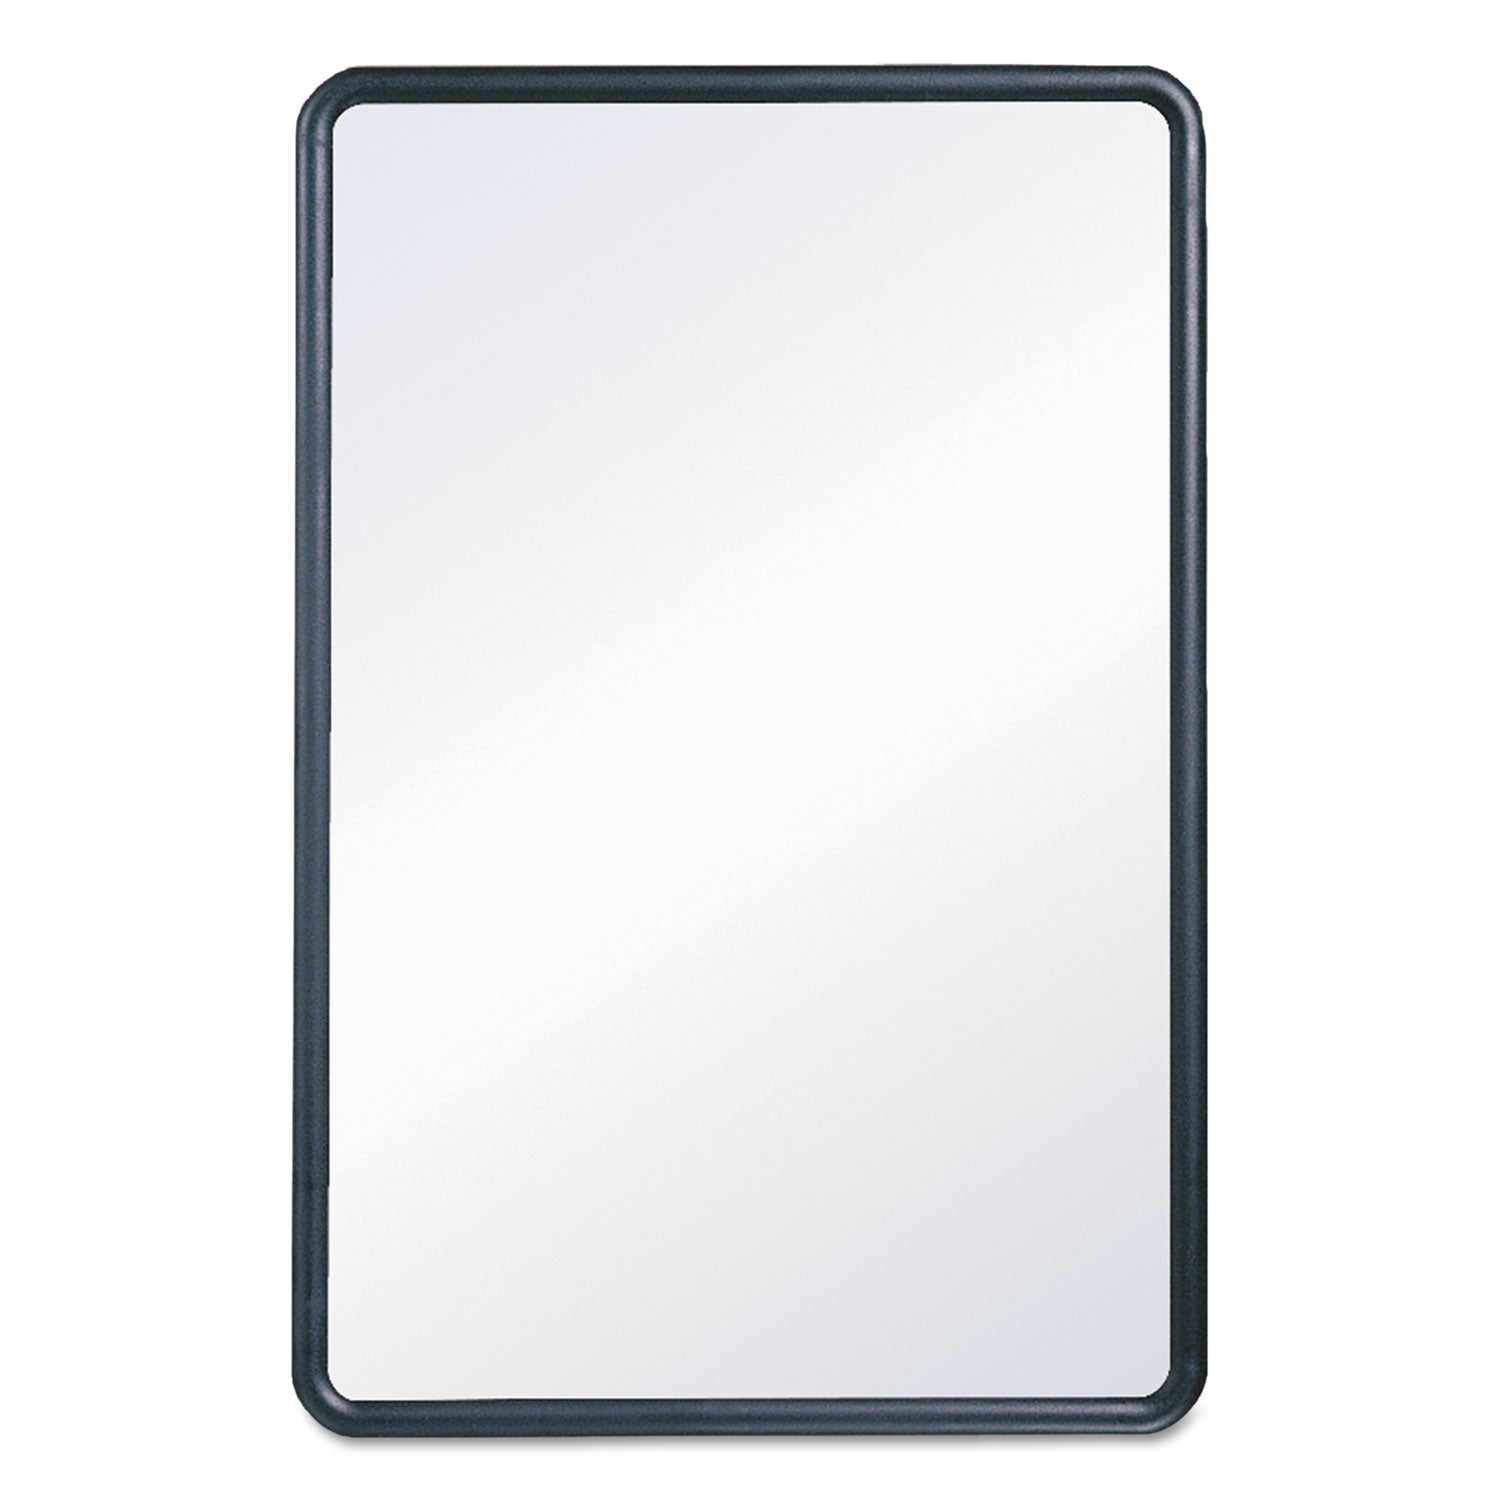 Contour Dry Erase Board, 24 x 18, Melamine White Surface, Black Plastic Frame - 